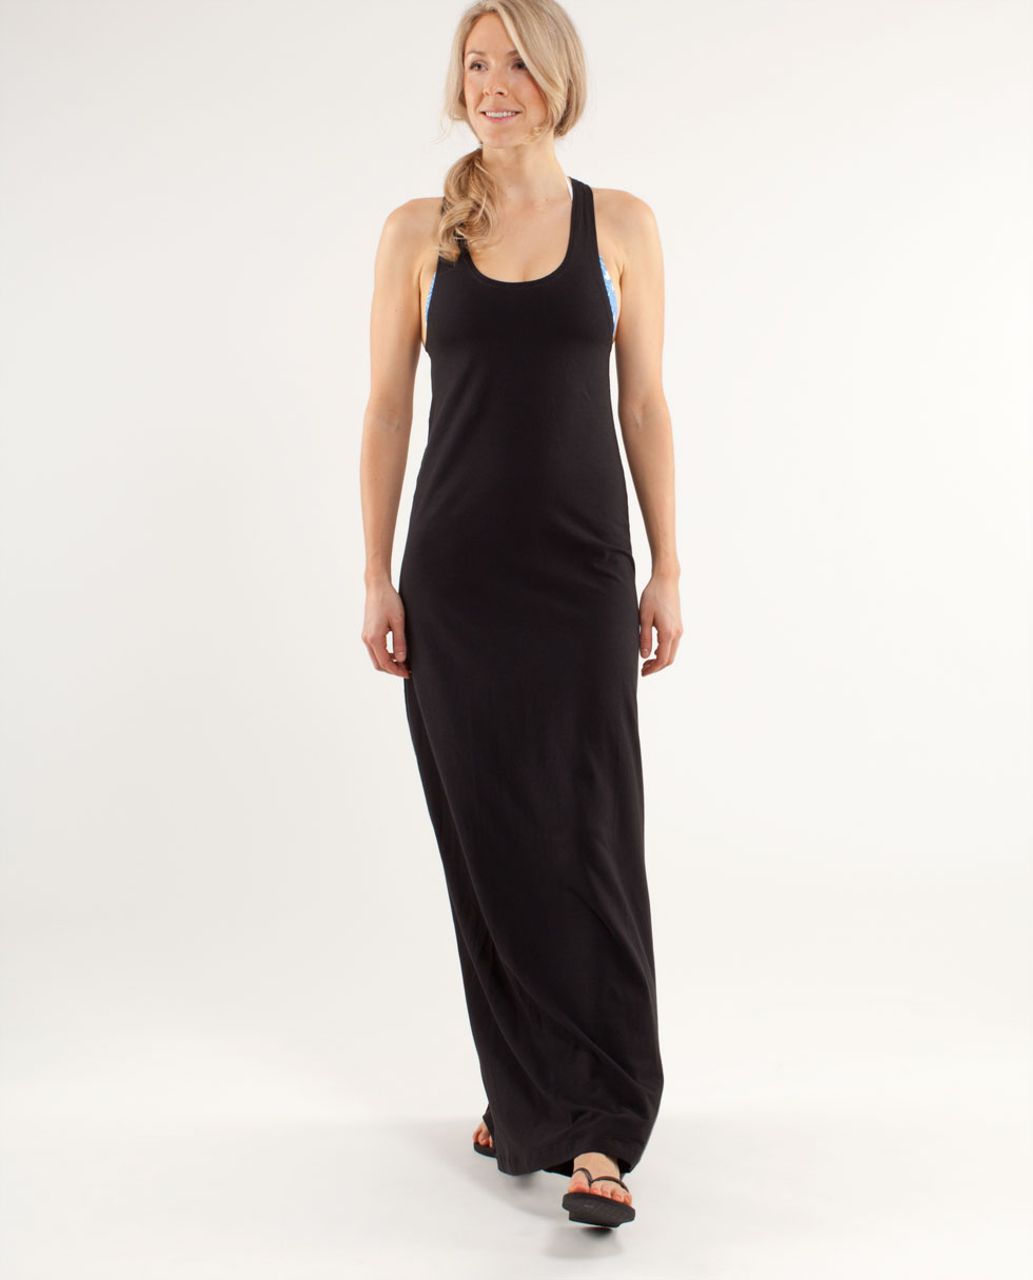 Lululemon Heatwave Maxi Dress - Black